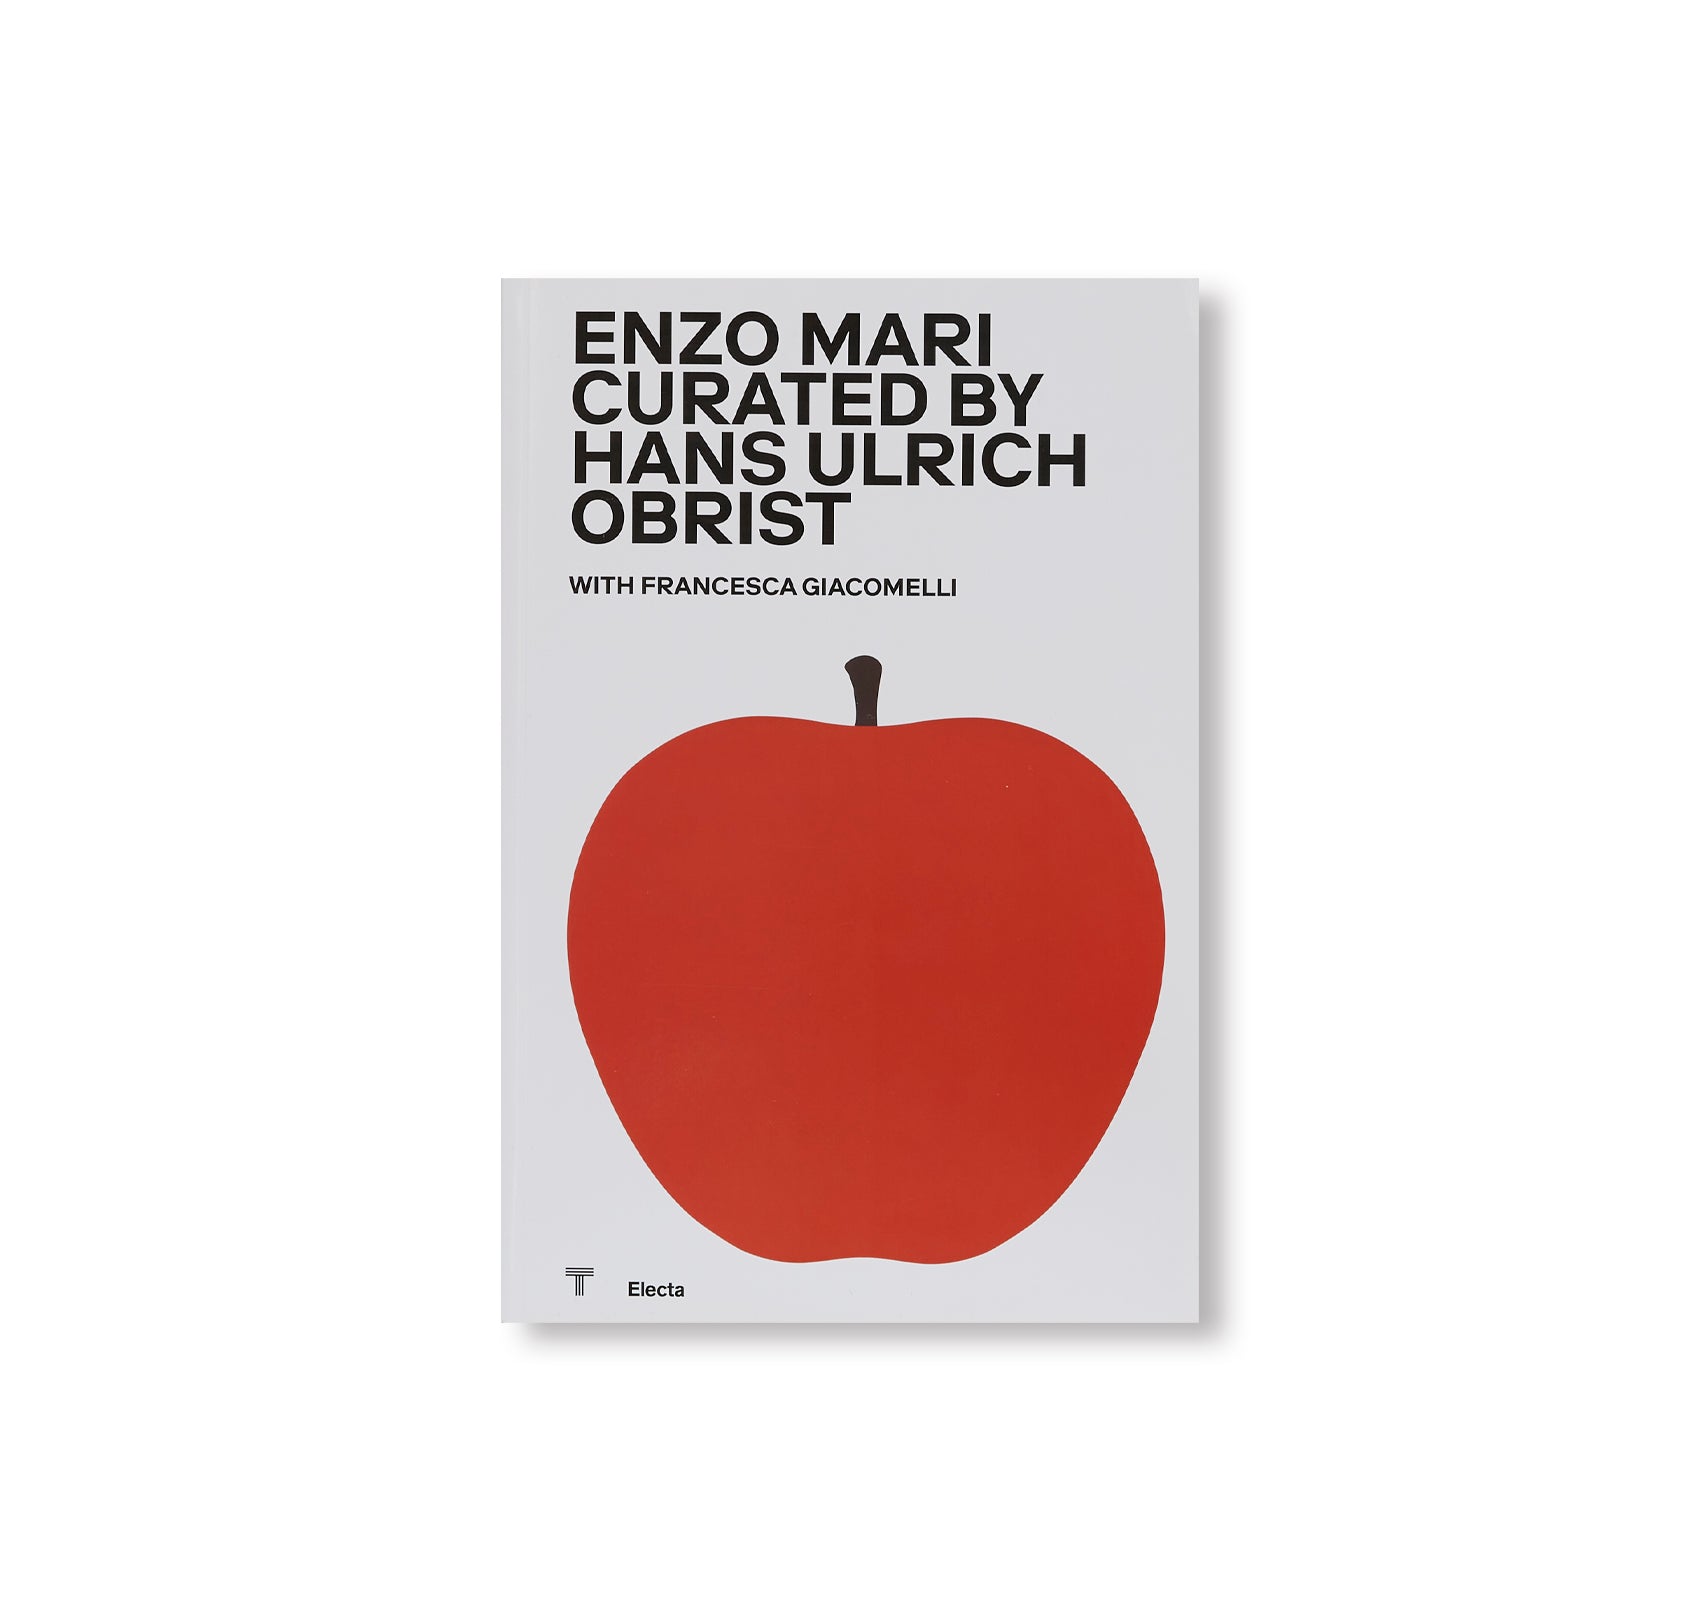 ENZO MARI CURATED BY HANS ULRICH OBRIST